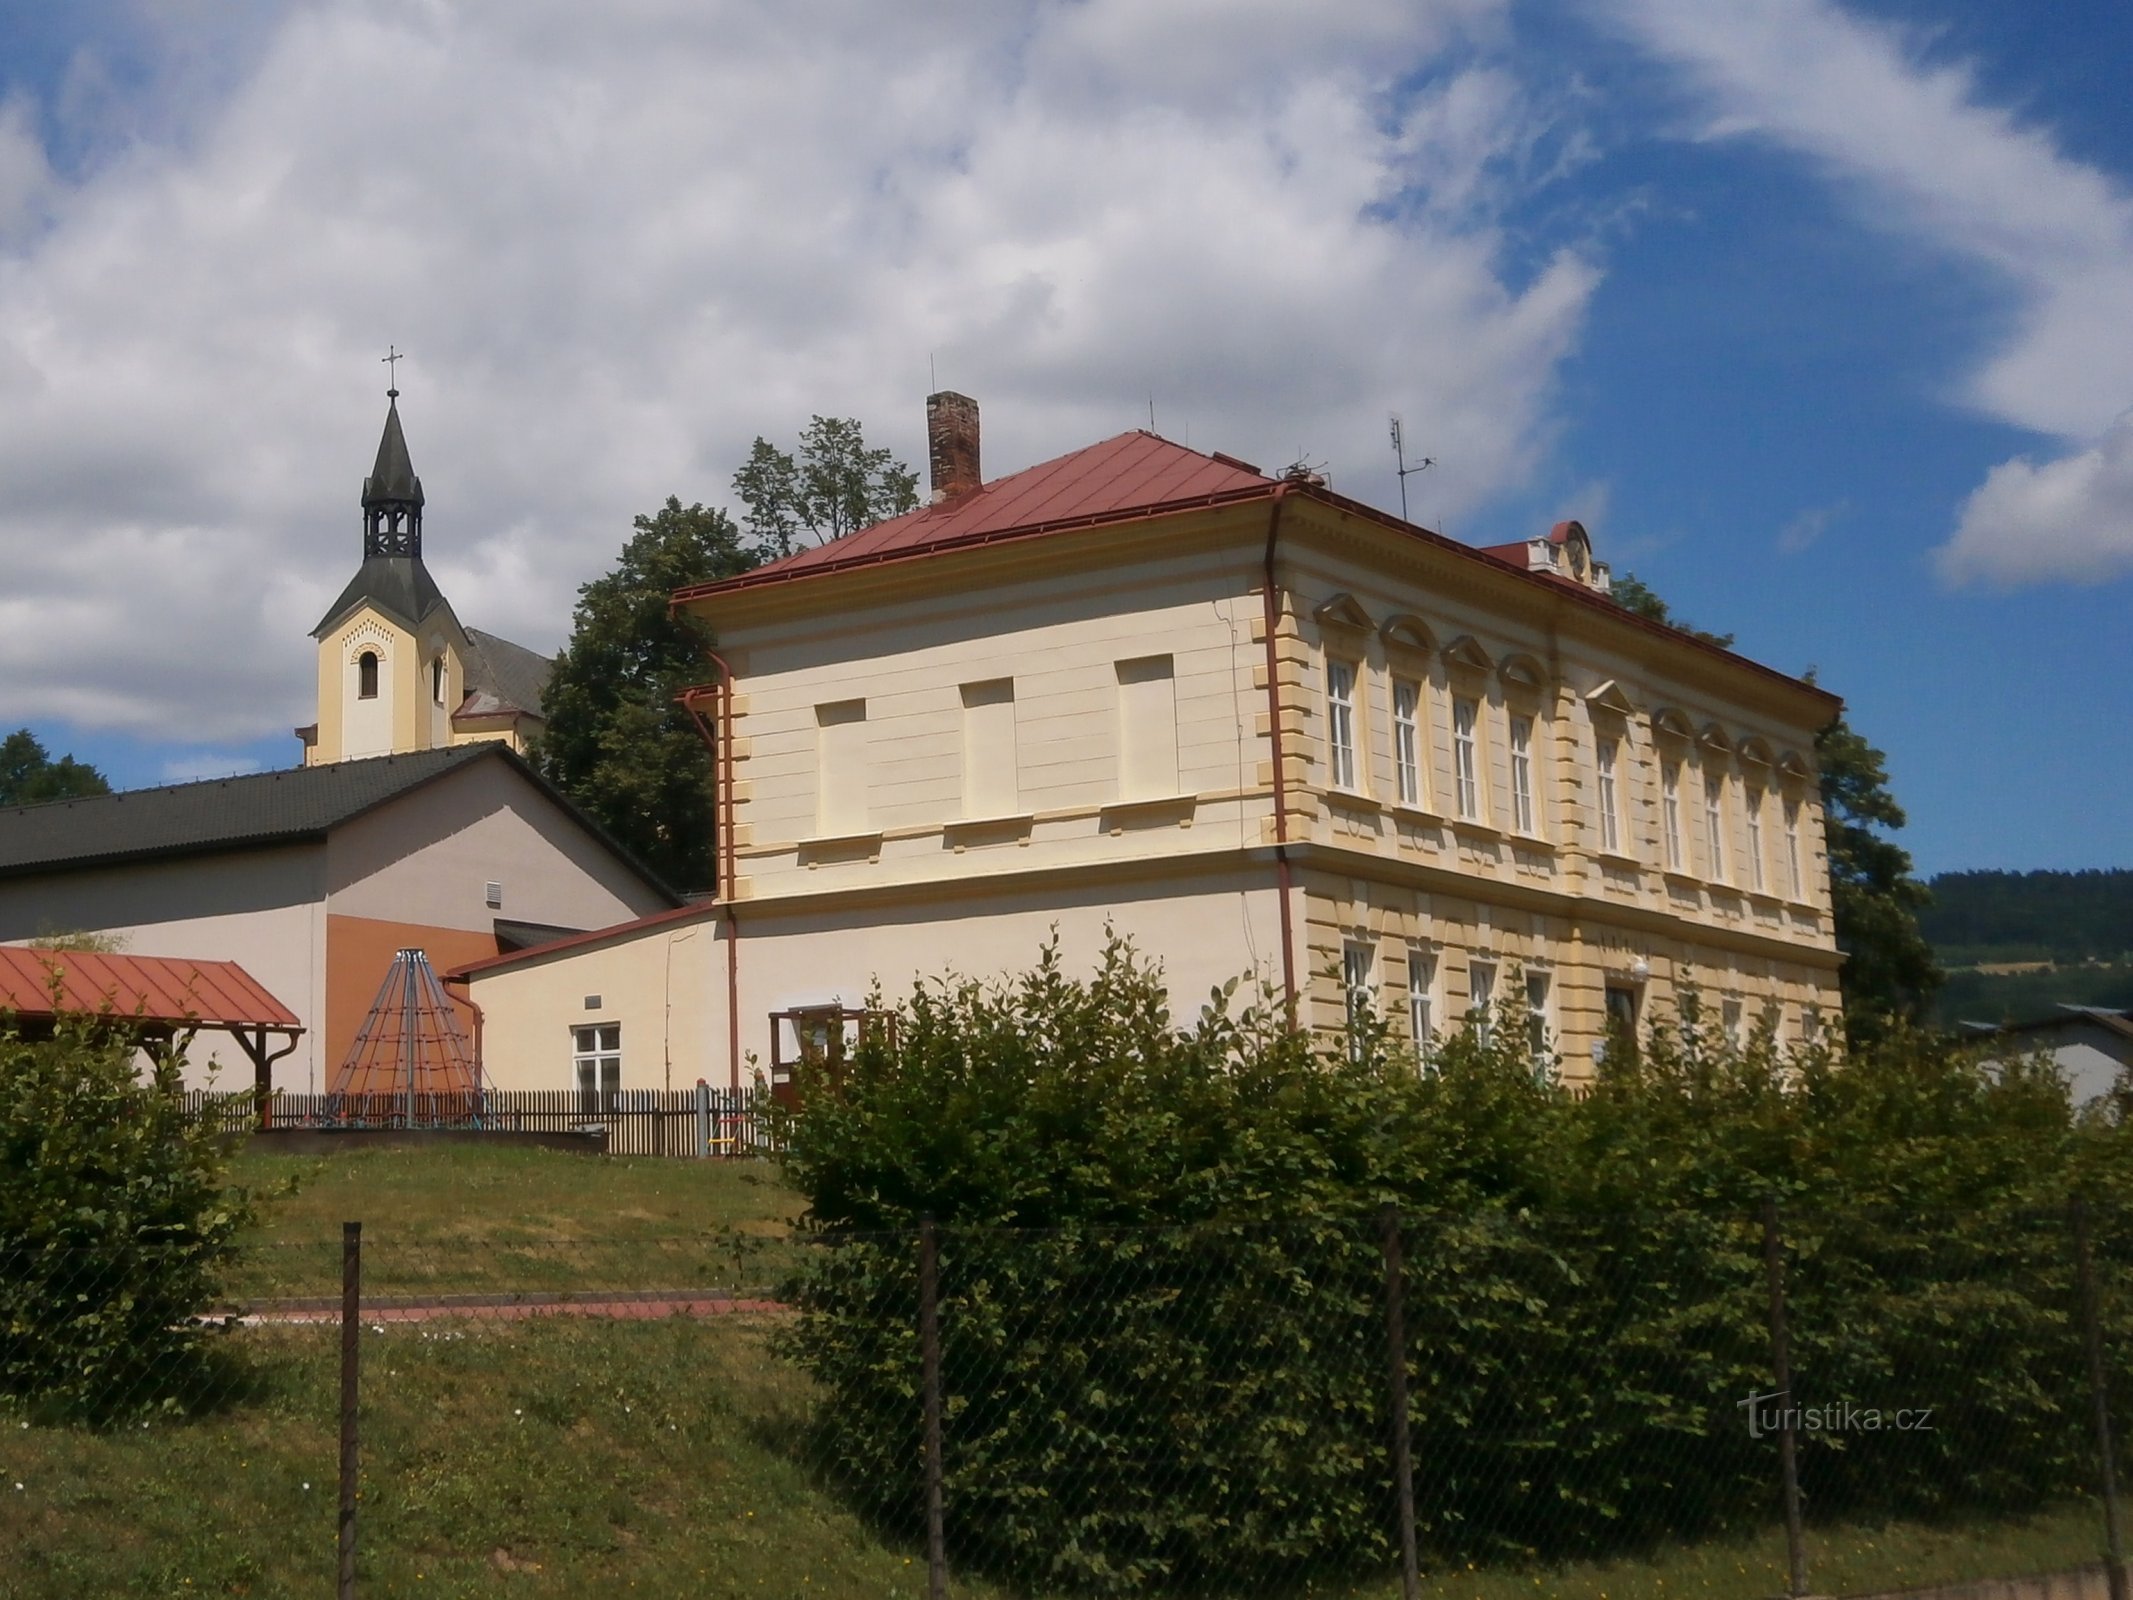 School with a church in the background (Batňovice, 3.7.2017 July XNUMX)